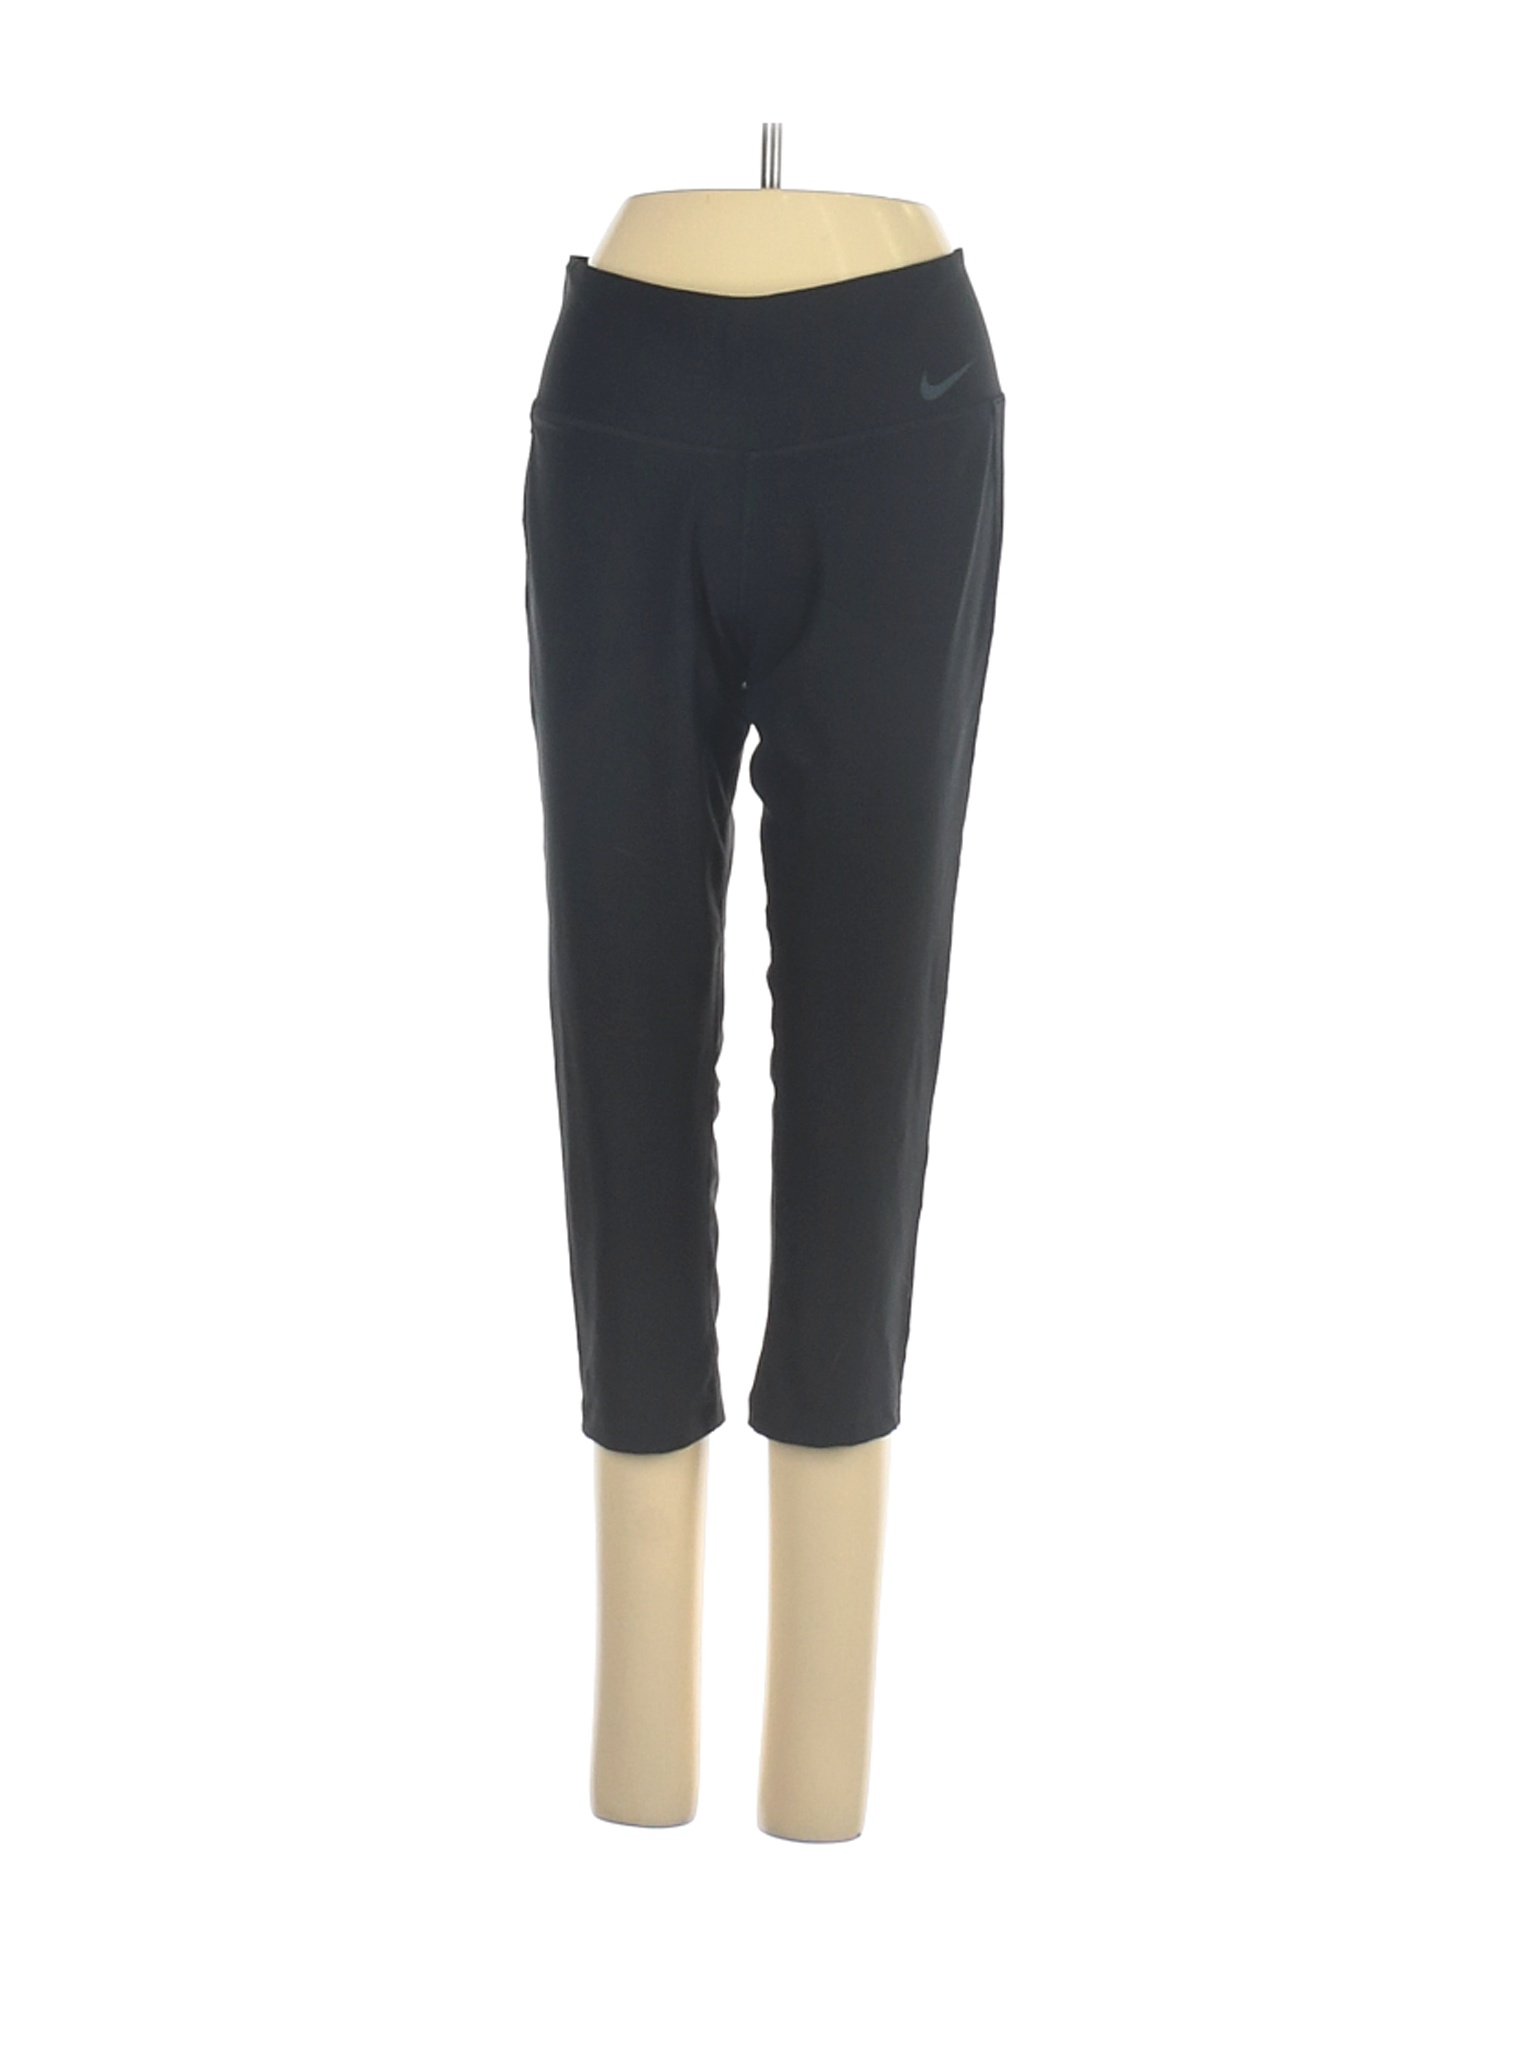 Nike Women Black Active Pants S | eBay